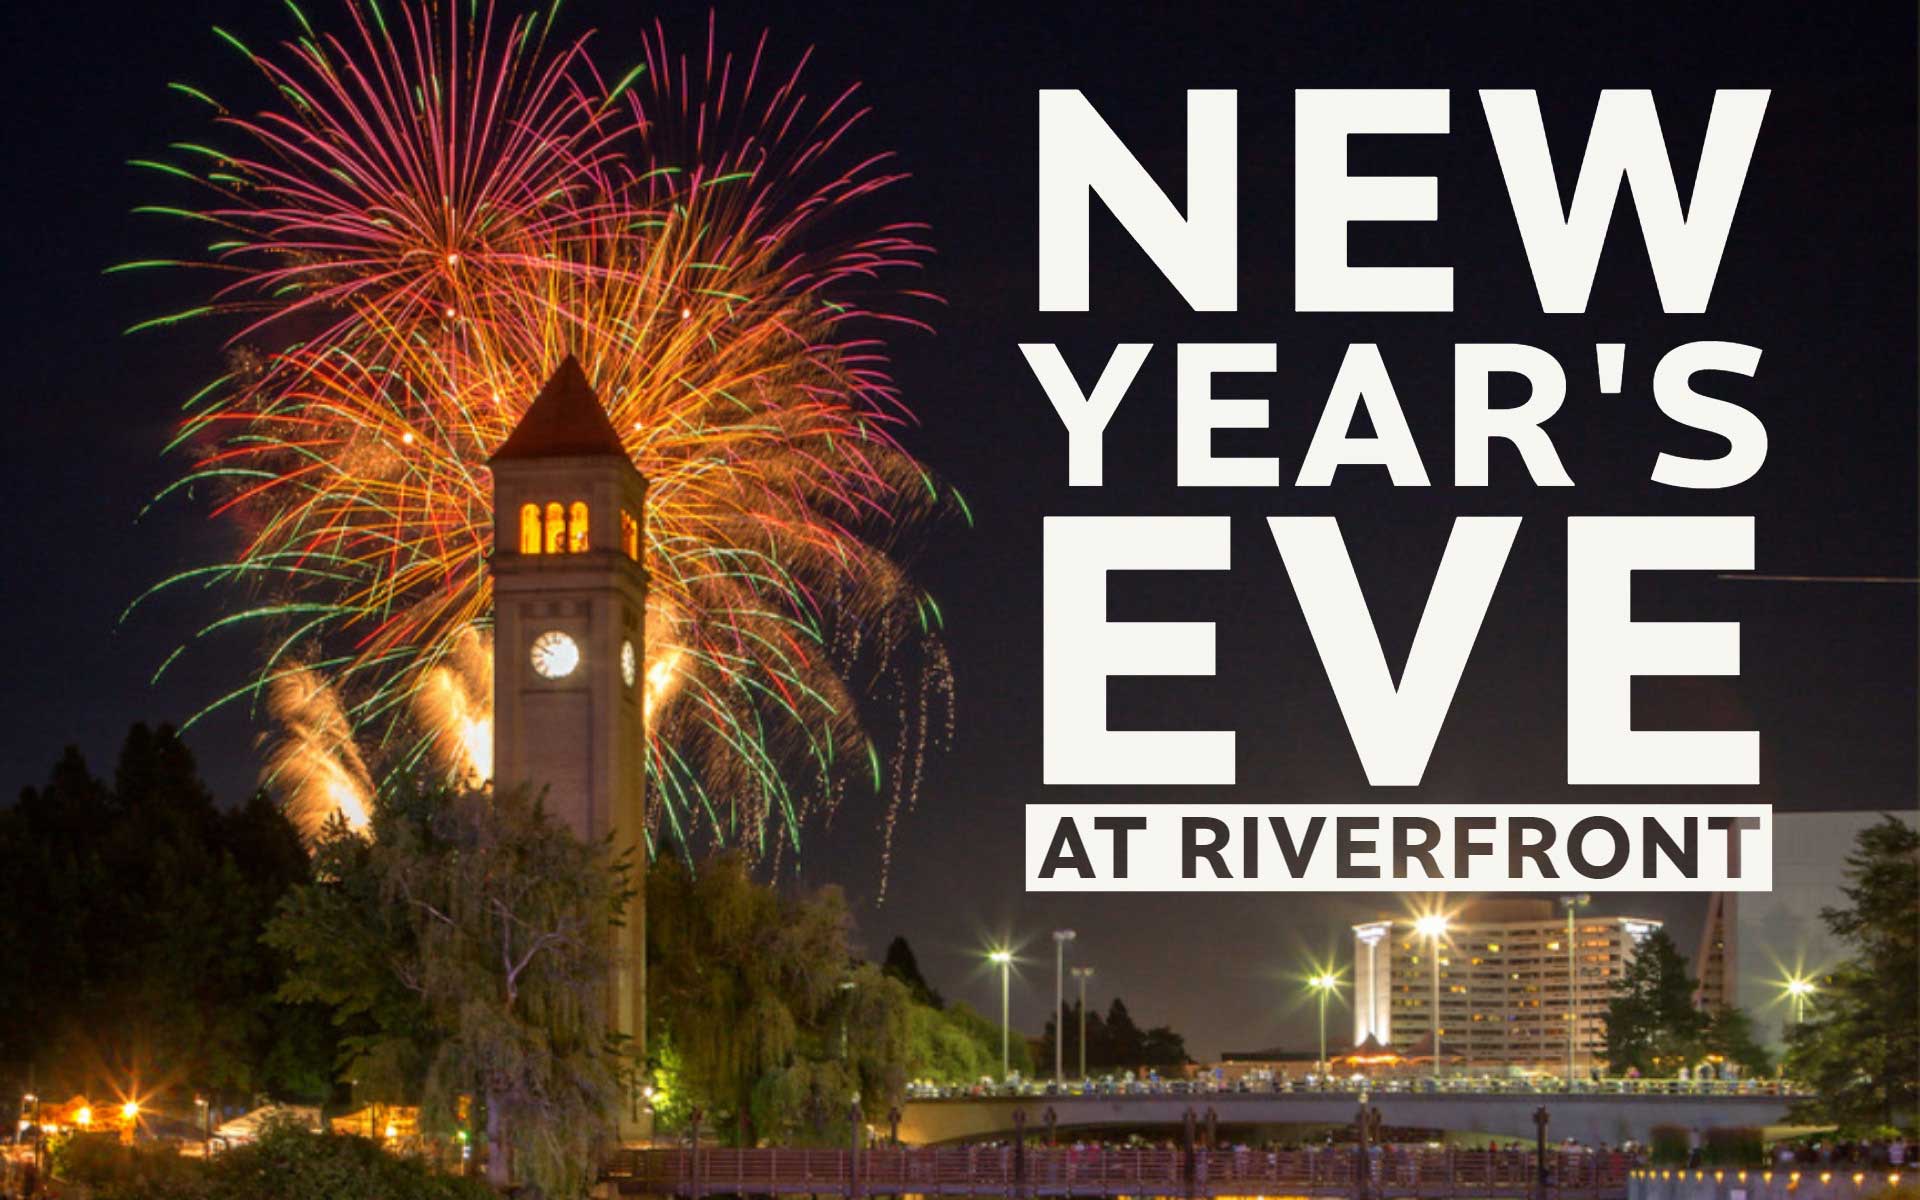 New Year's Eve Fireworks at Riverfront City of Spokane, Washington